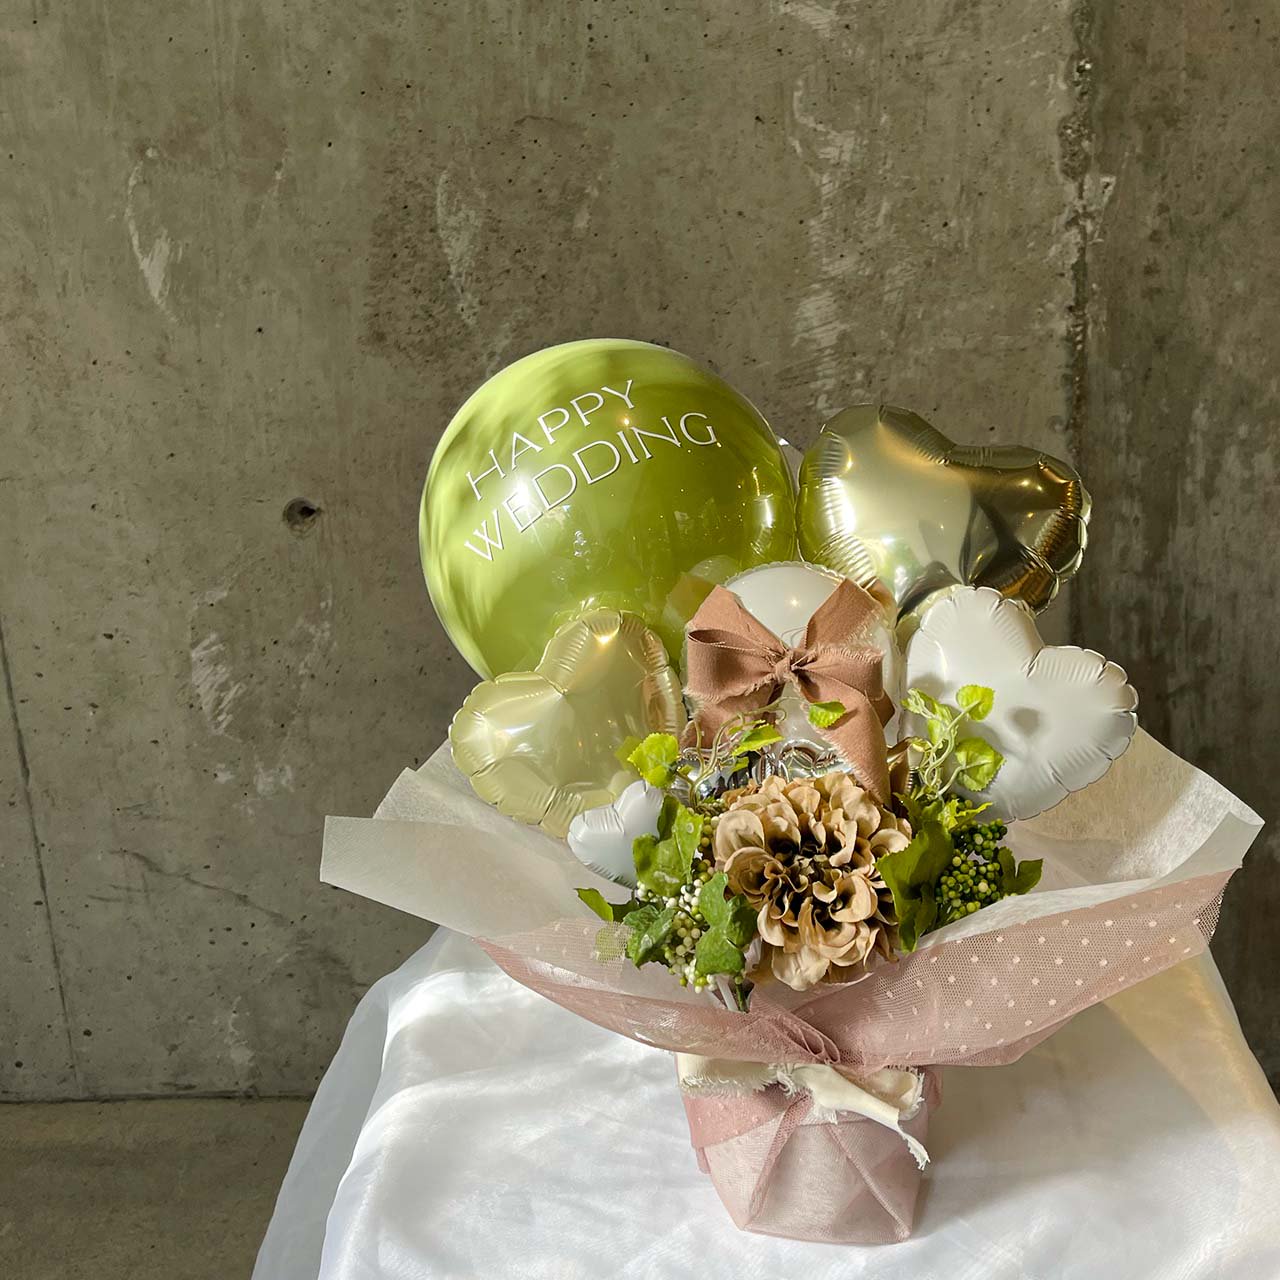 Sours Balloon Gift - Table top type - スールバルーンギフト - チャビーバルーン 大阪 名古屋  滋賀にあるおしゃれなバルーン電報 バルーン装飾 バルーンギフトのことならチャビーバルーン